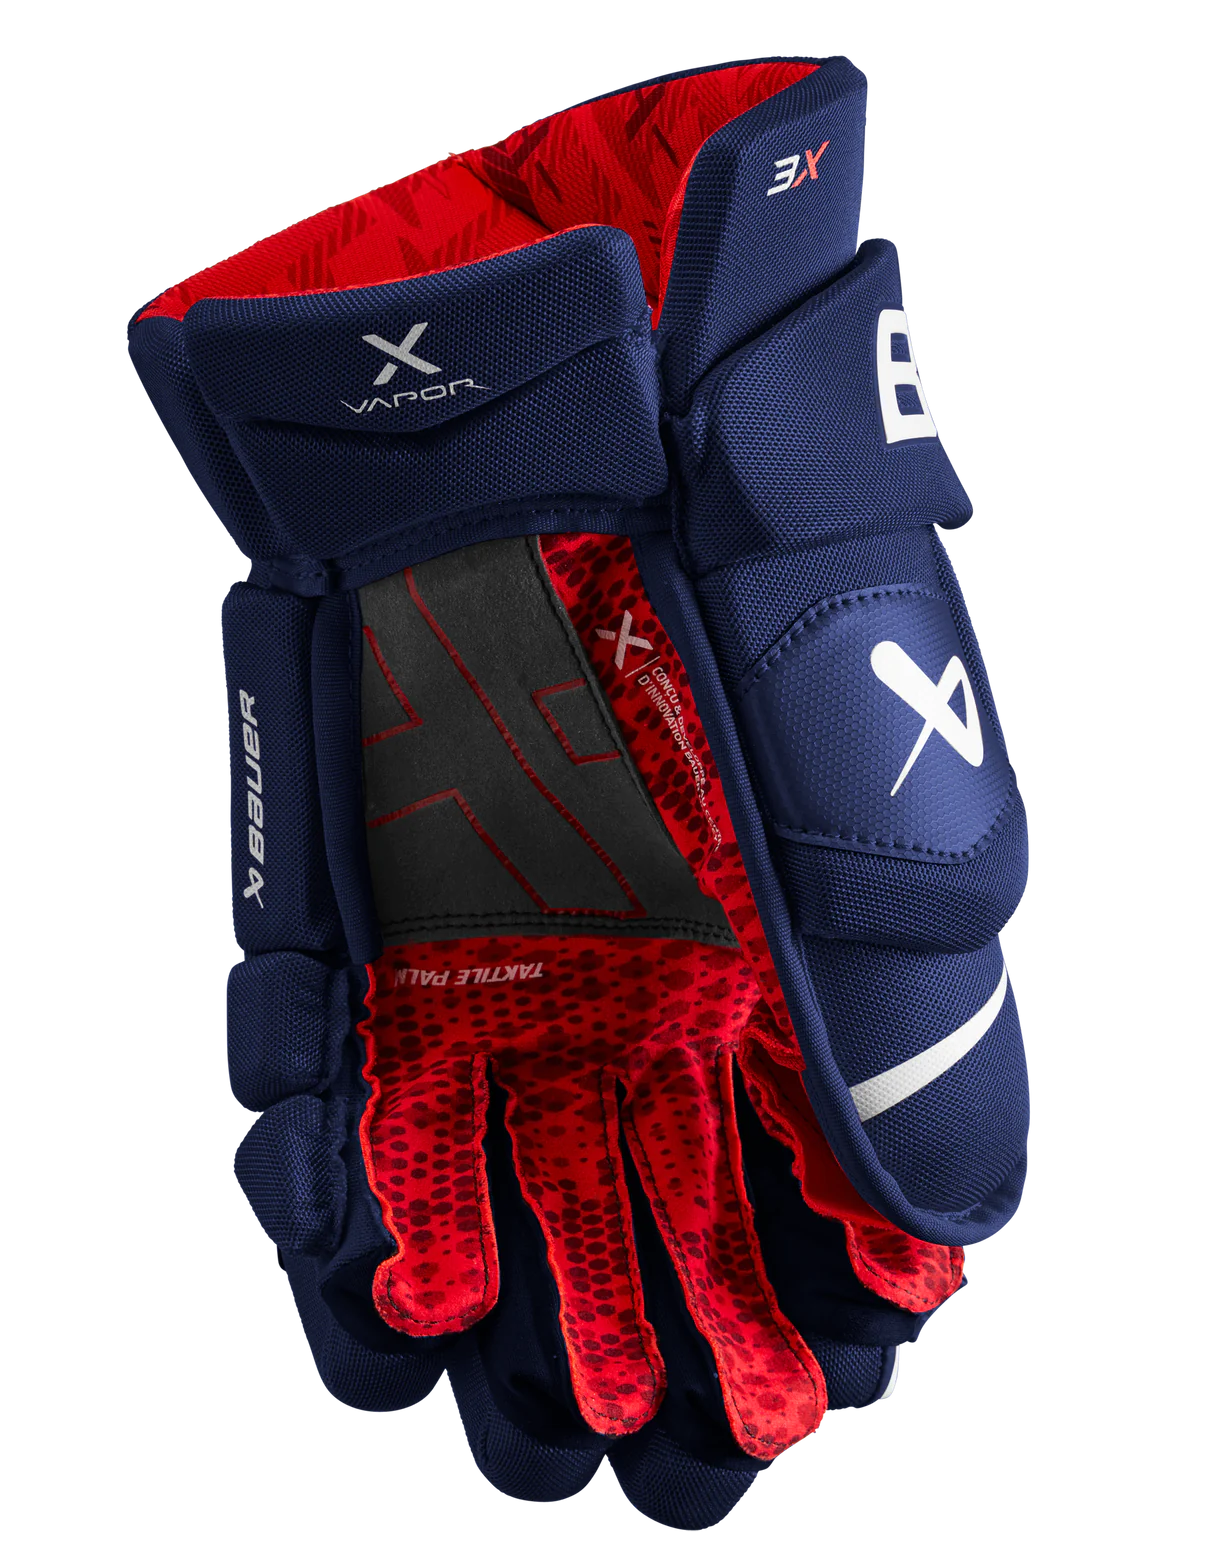 Bauer Vapor 3X Senior Hockey Gloves - Navy